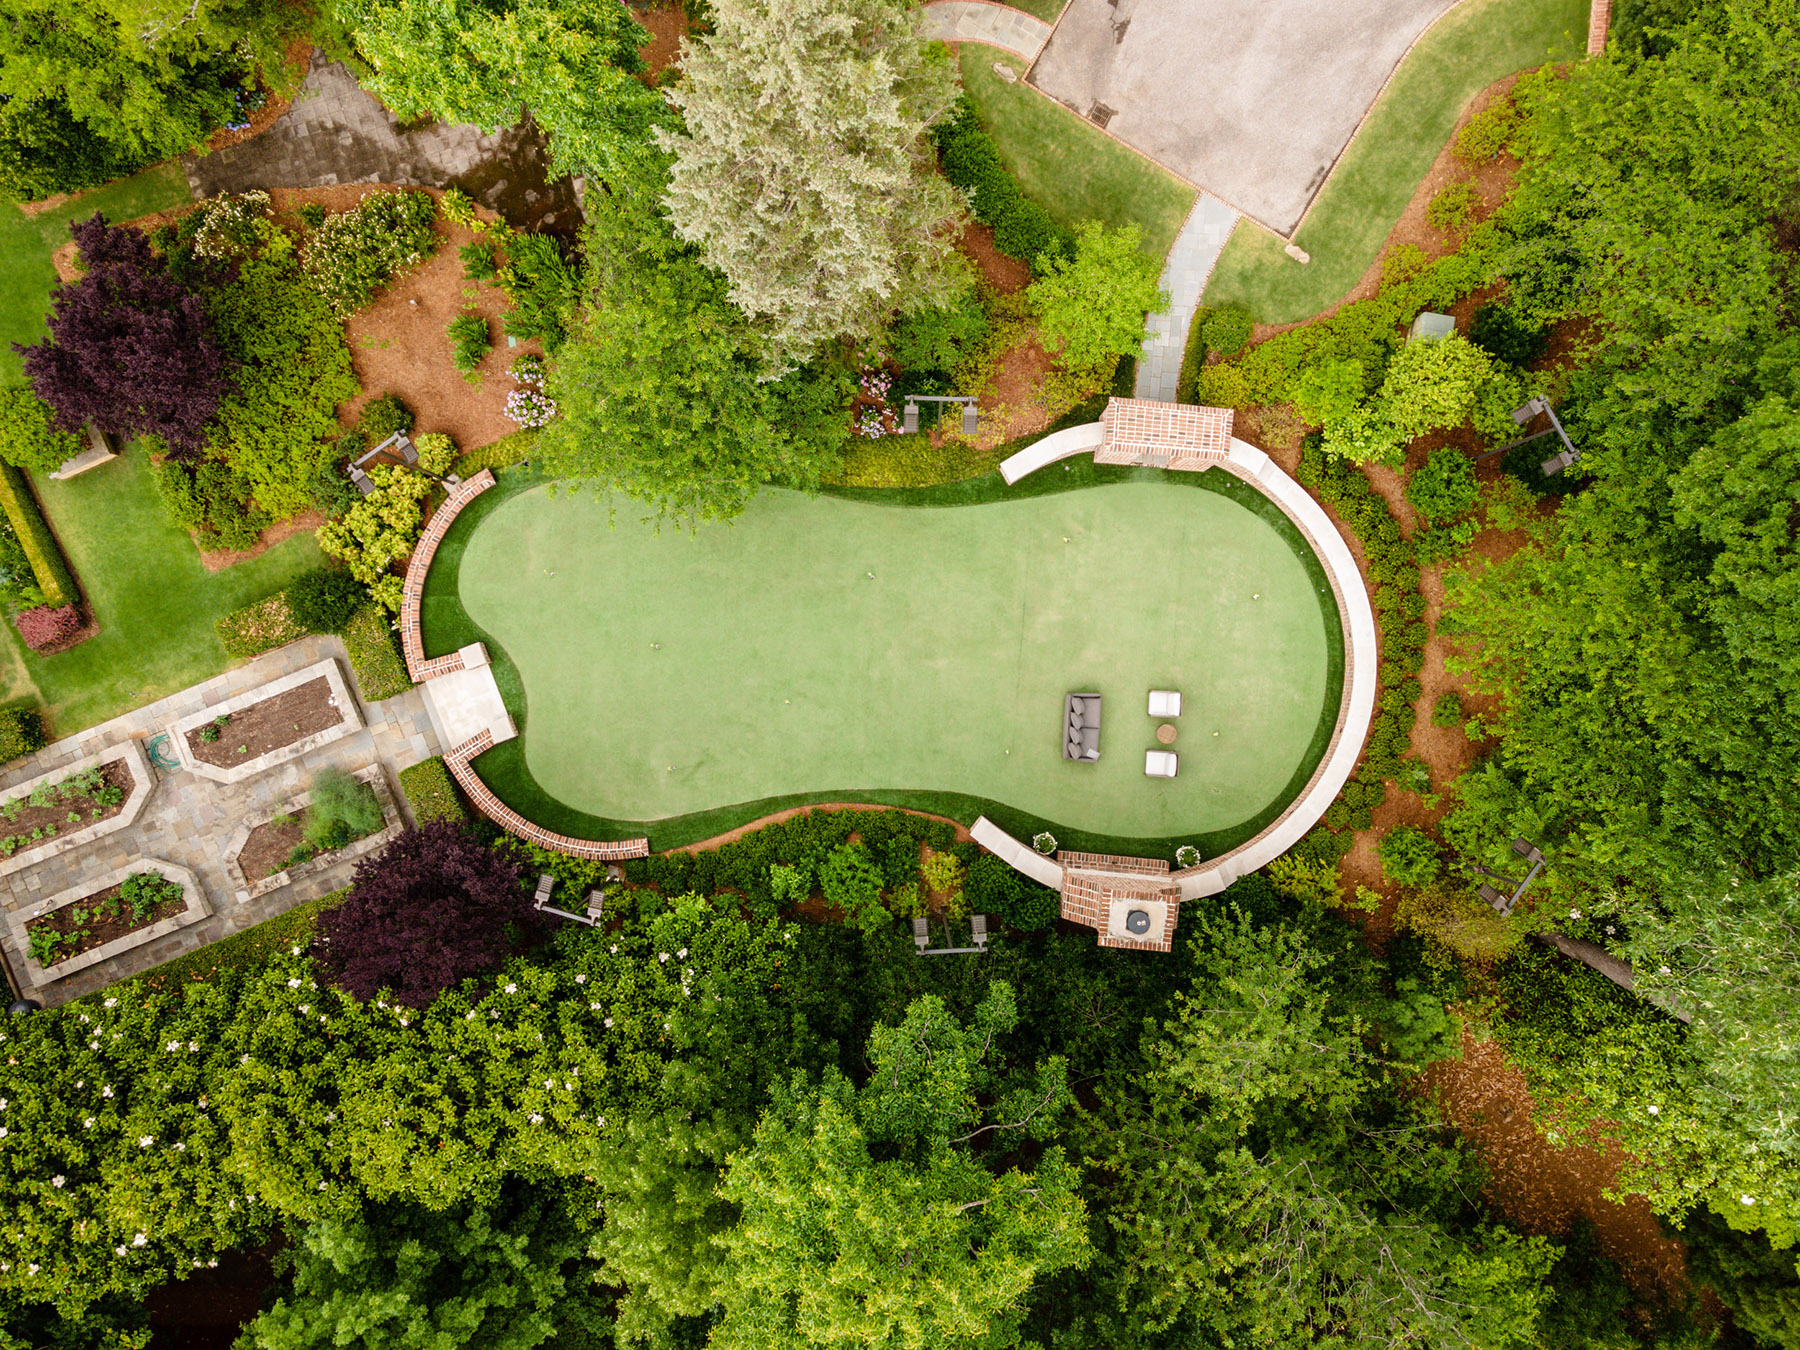 Aerial photo of backyard putting green